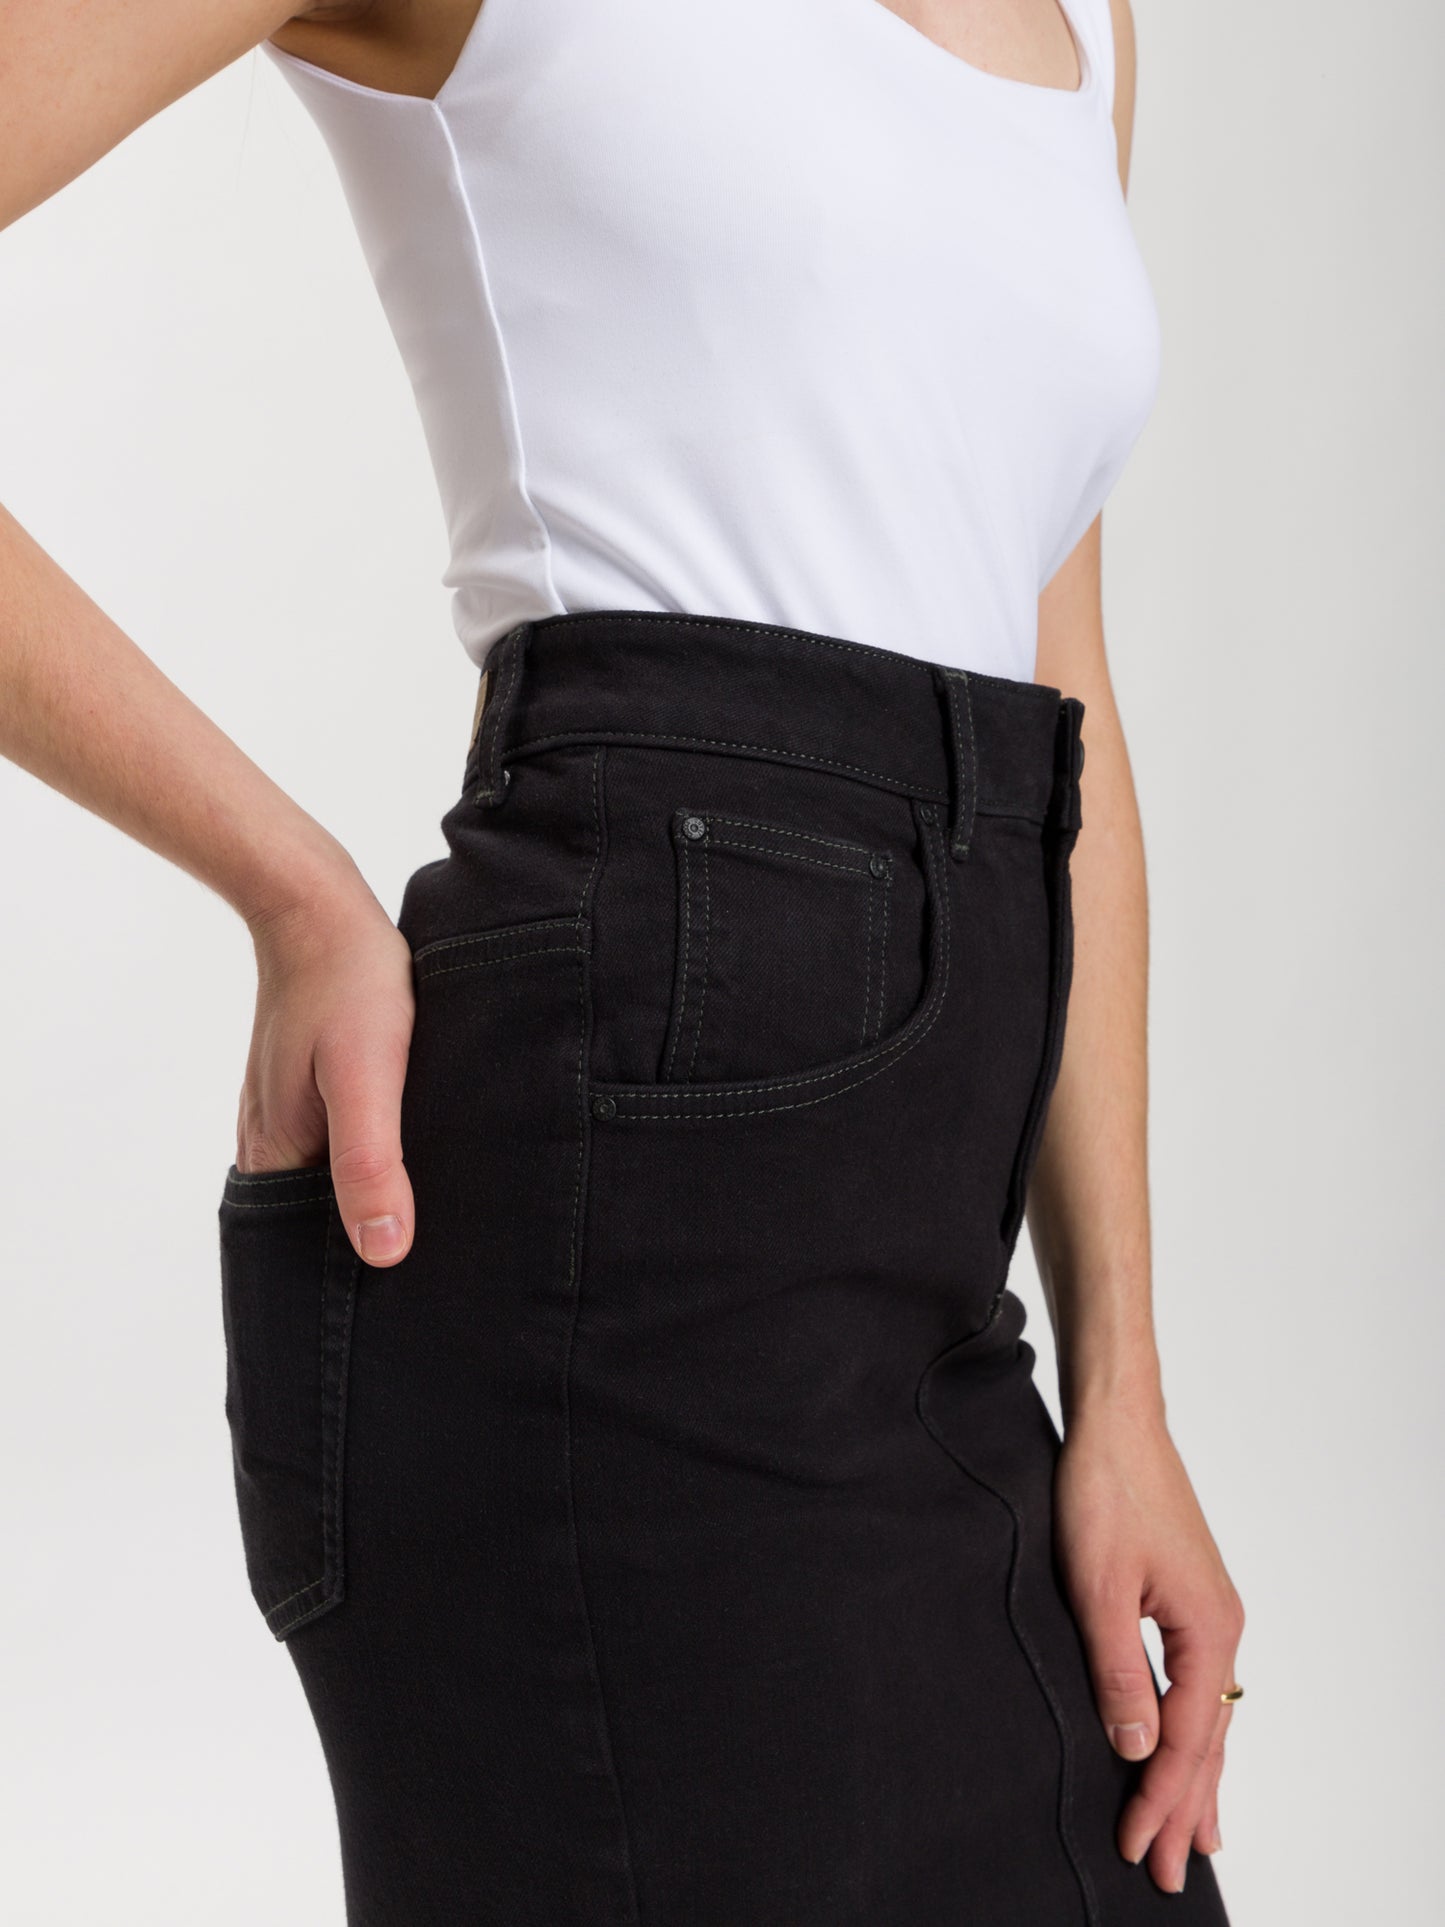 Women's maxi pencil skirt in black